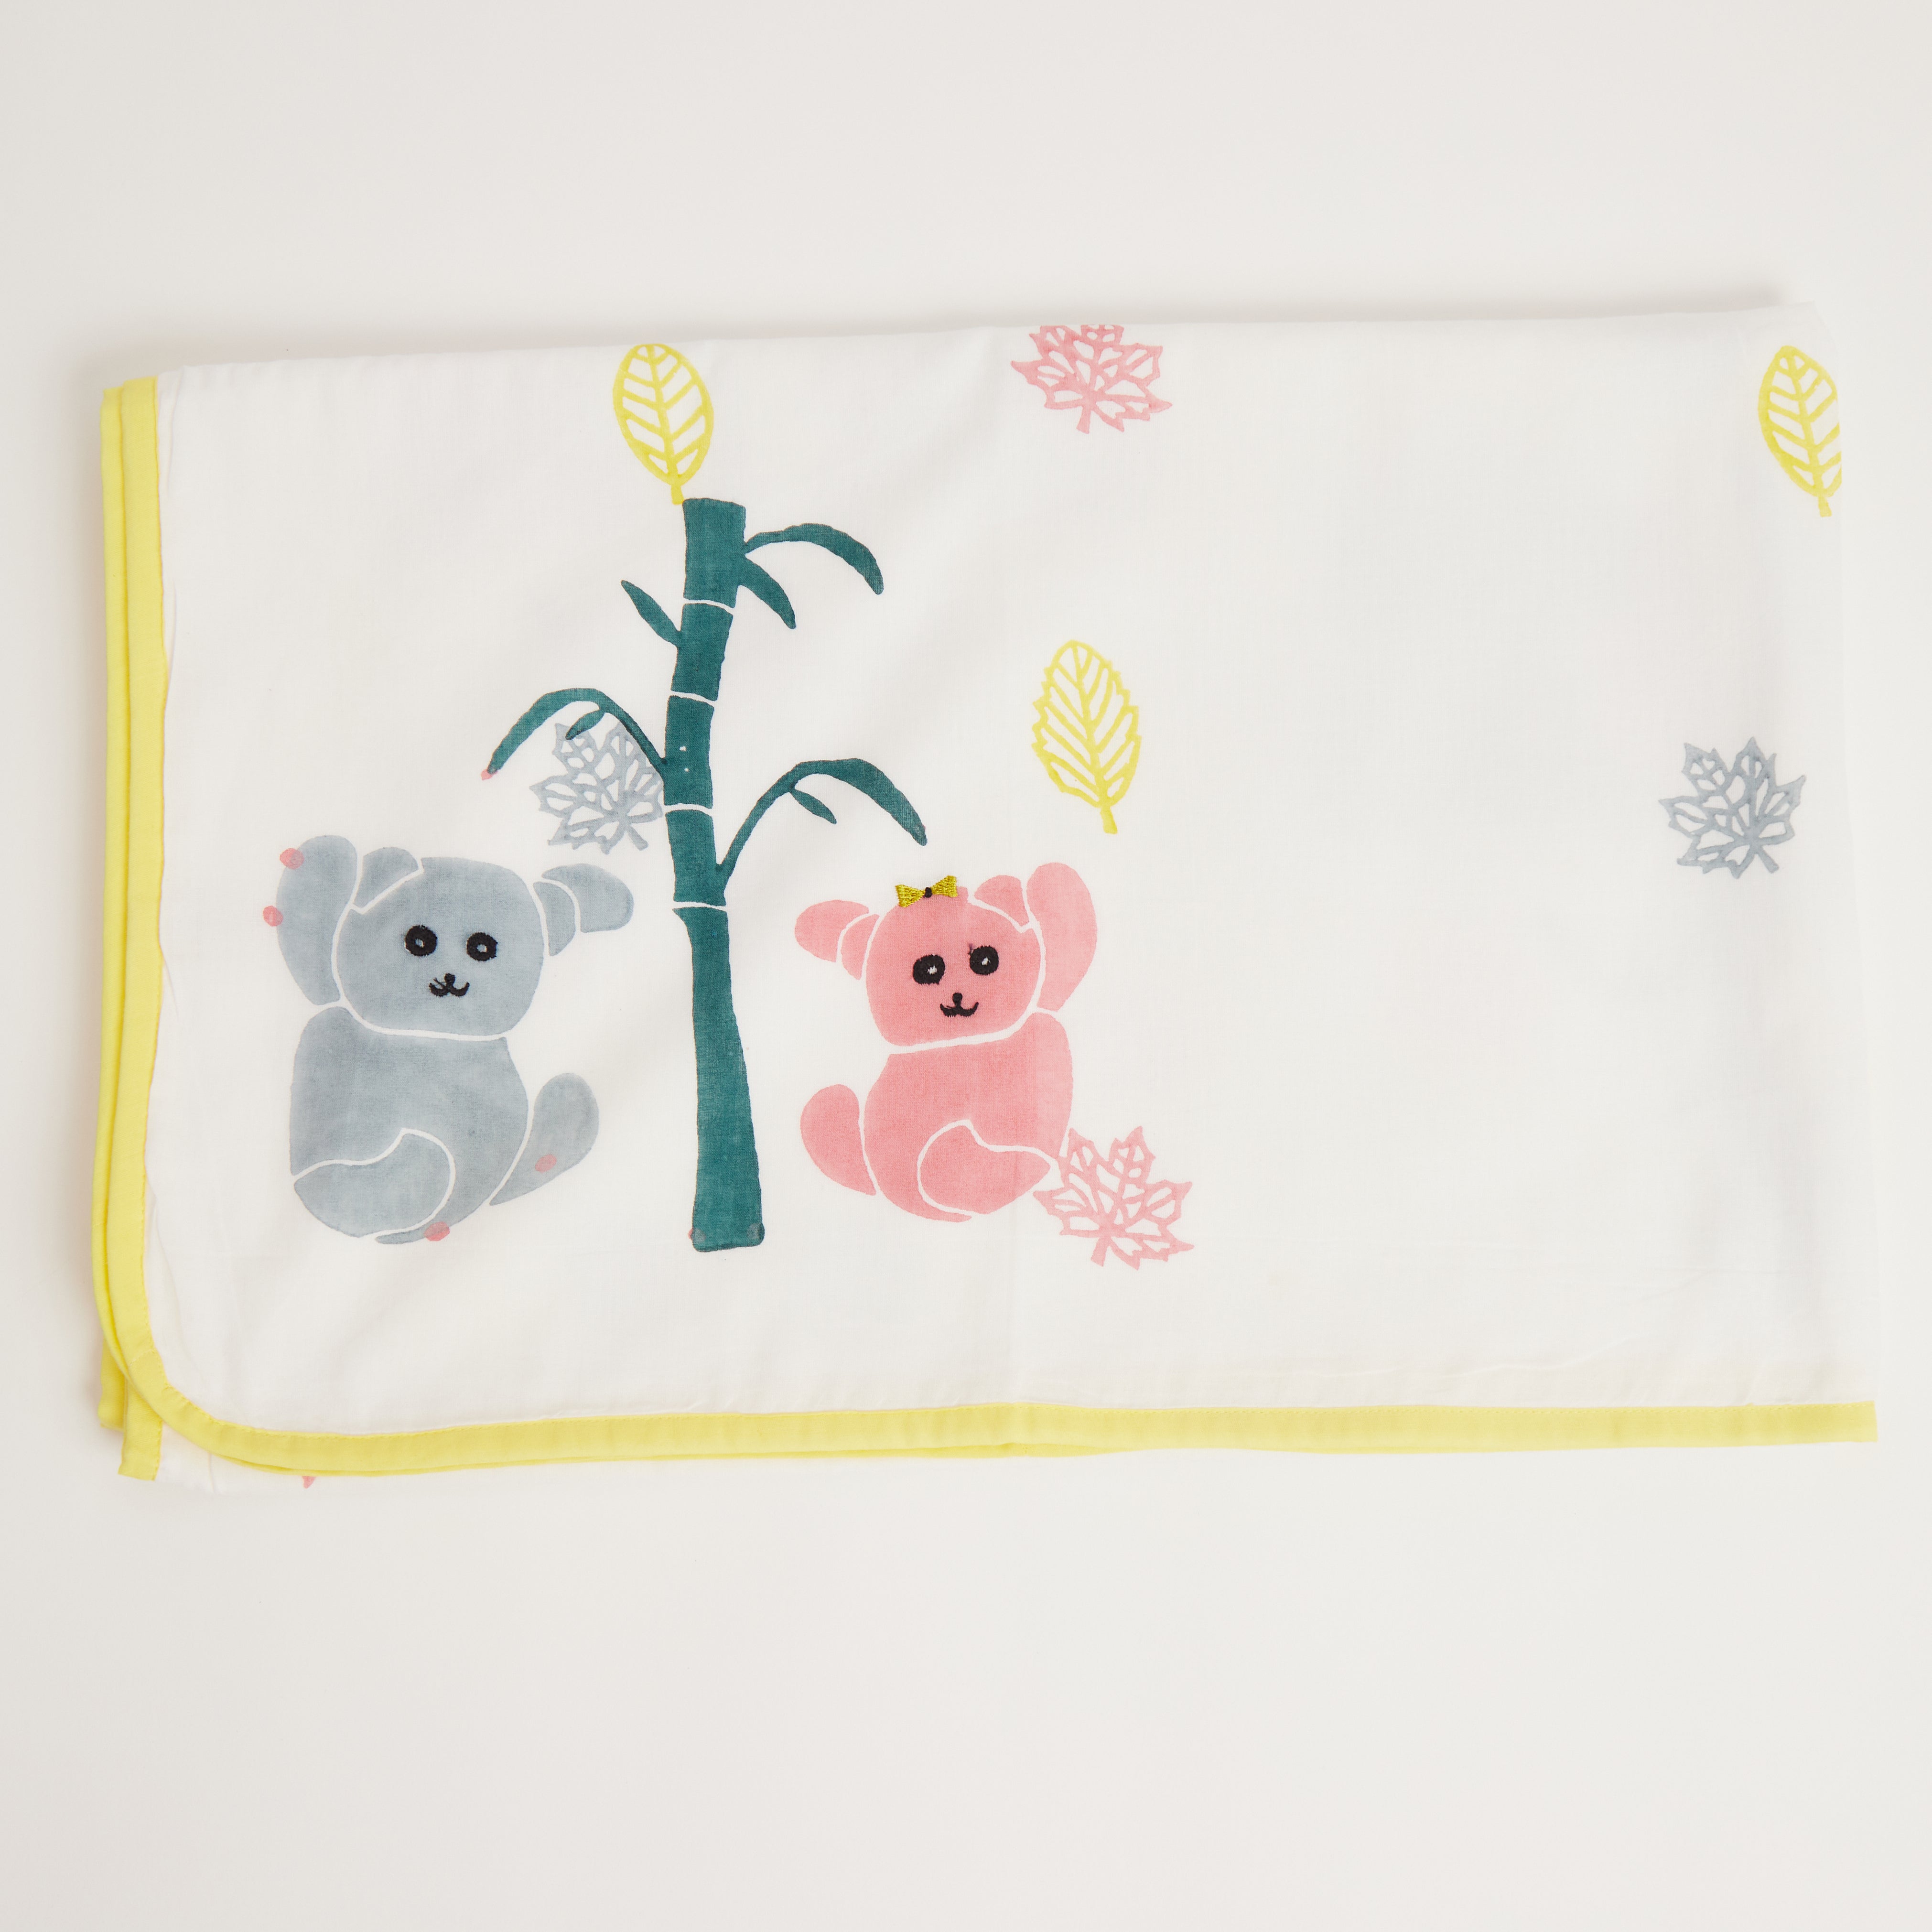 Masaya Cot Bedding Set- K for Koala - Yellow